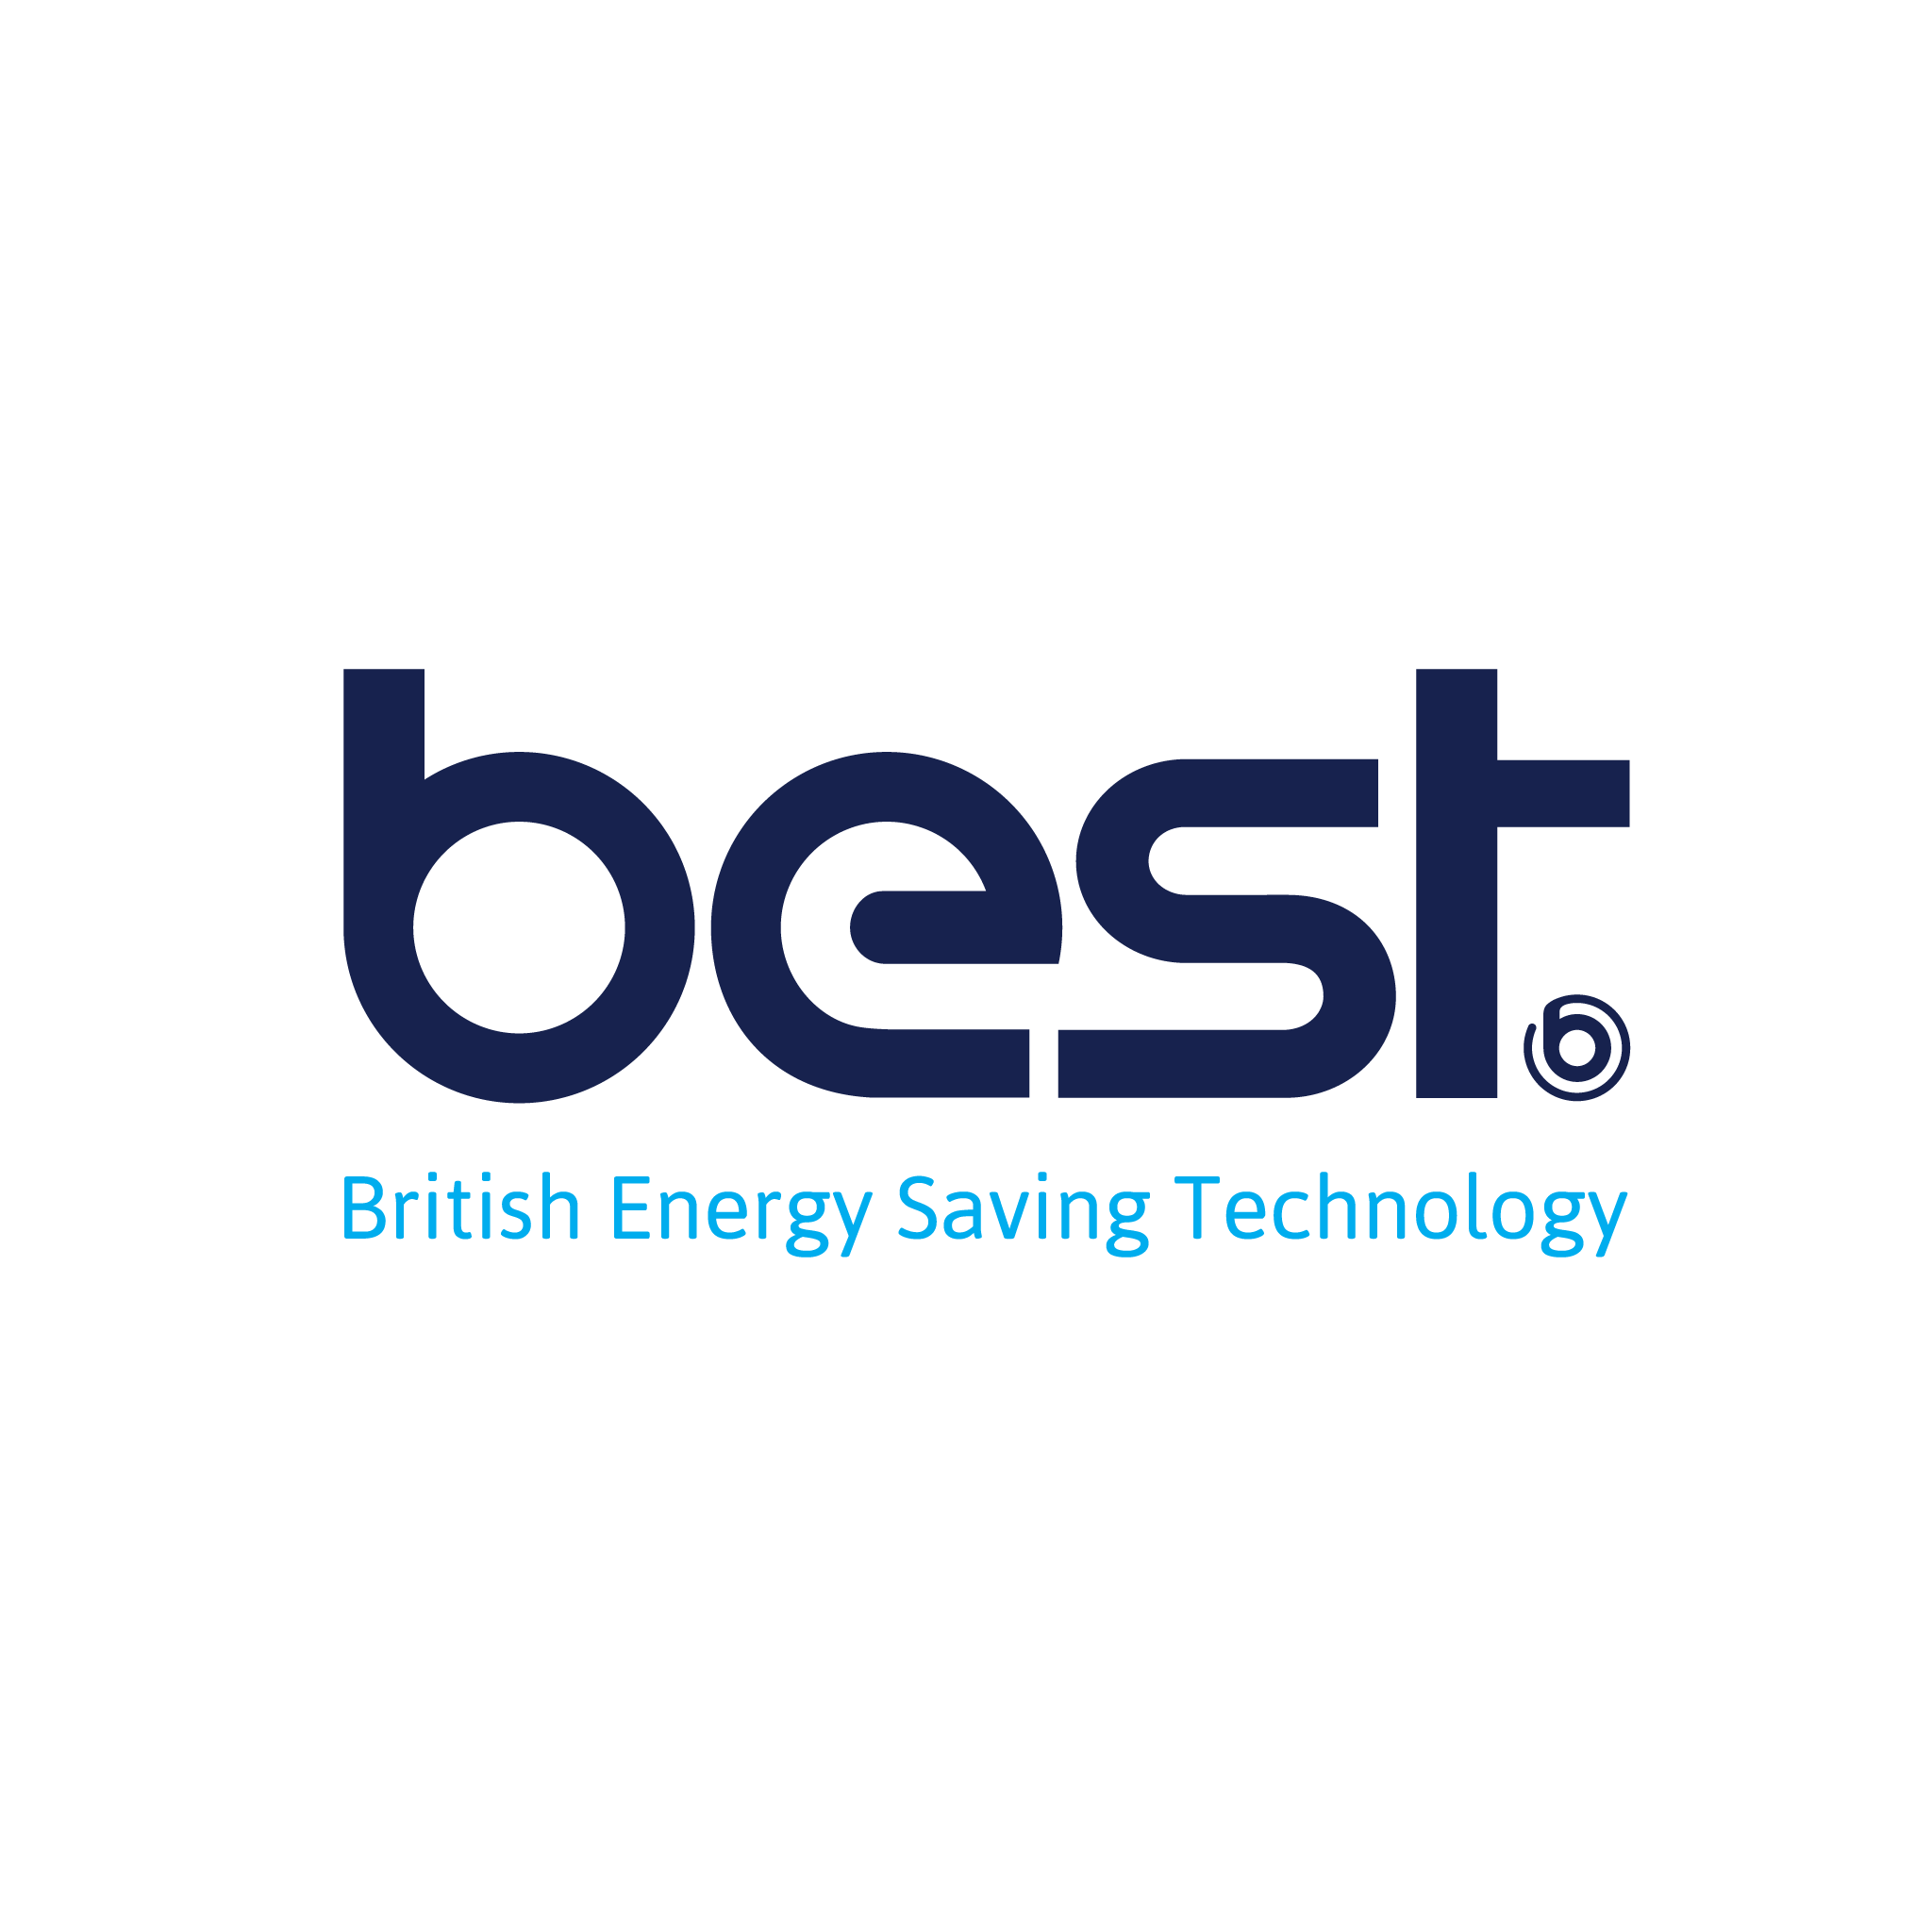 British Energy Saving Technology